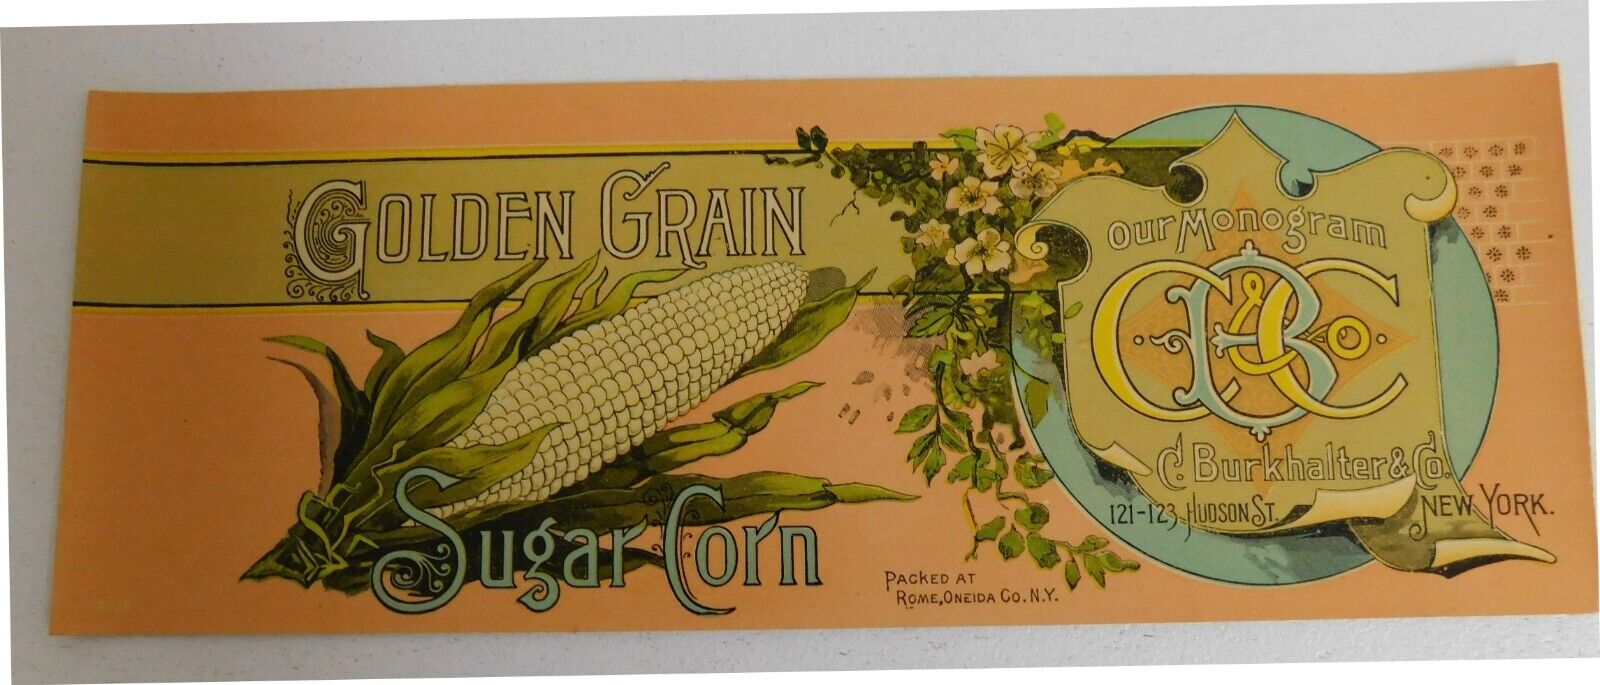 Vintage Golden Grain  Sugar Corn  Can label ....Rome, New York...Circa 1890's